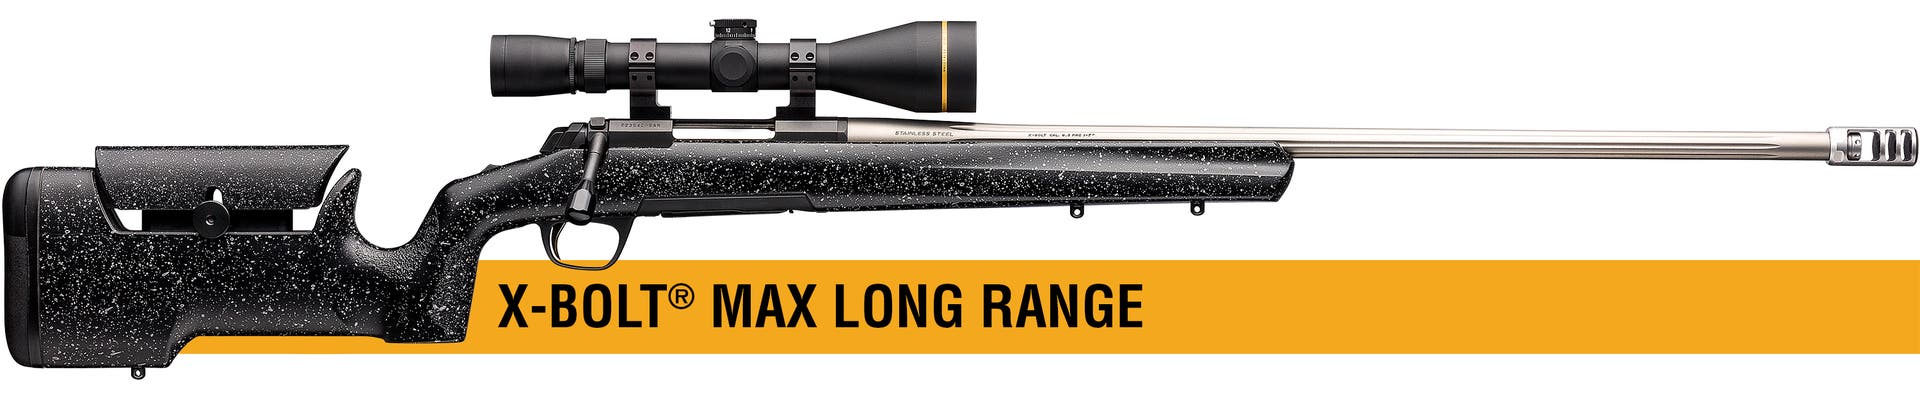 X-Bolt Max Long Range